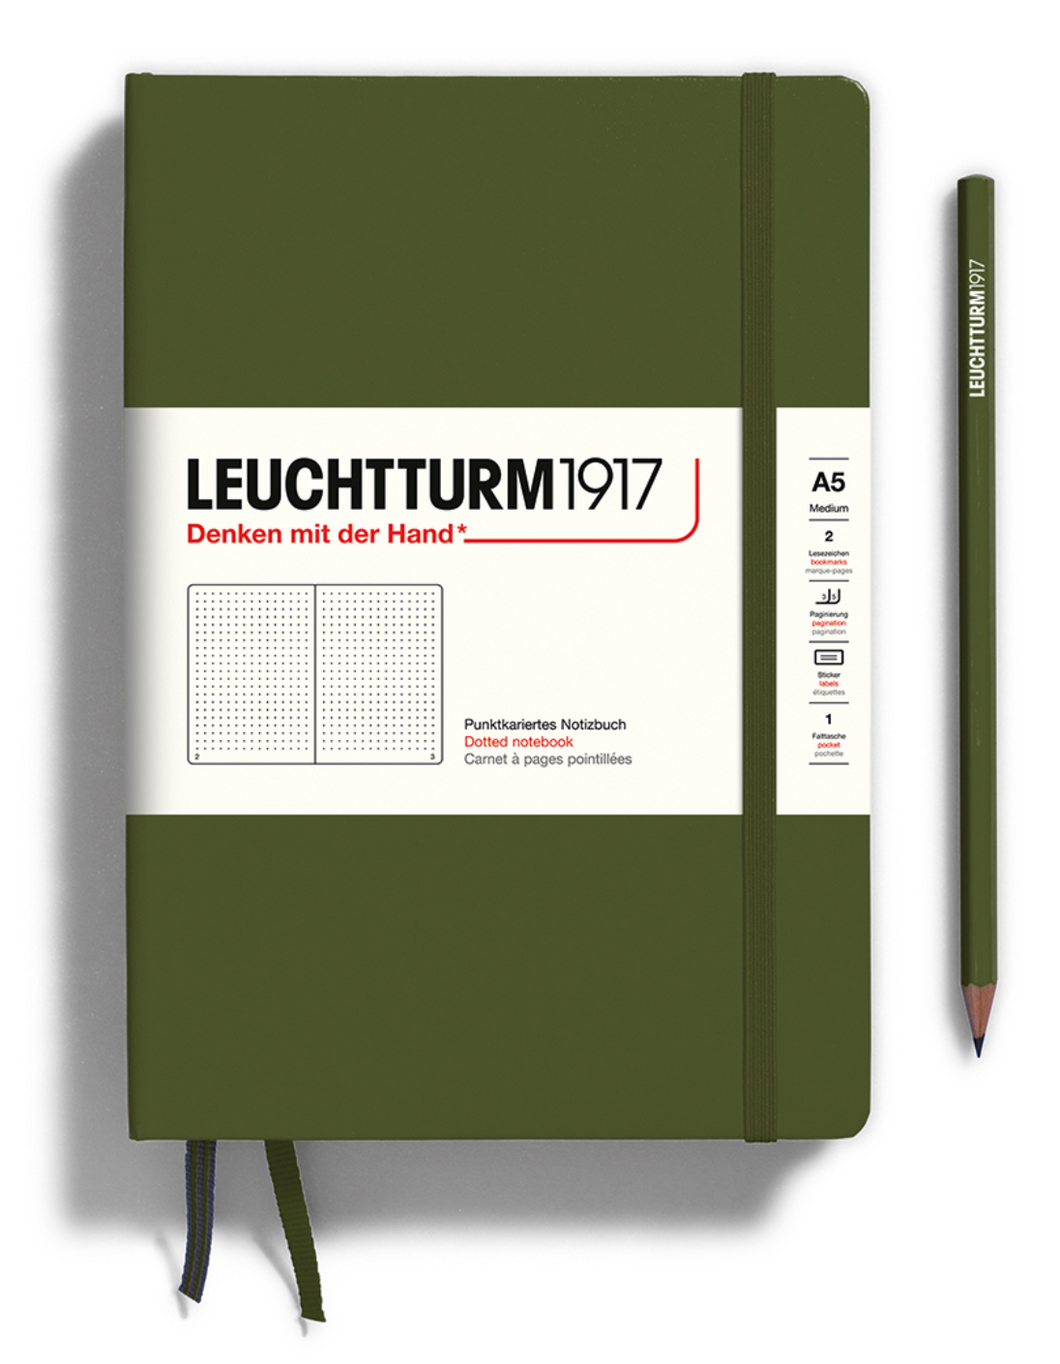 Hardcover Notebook - Medium, Army